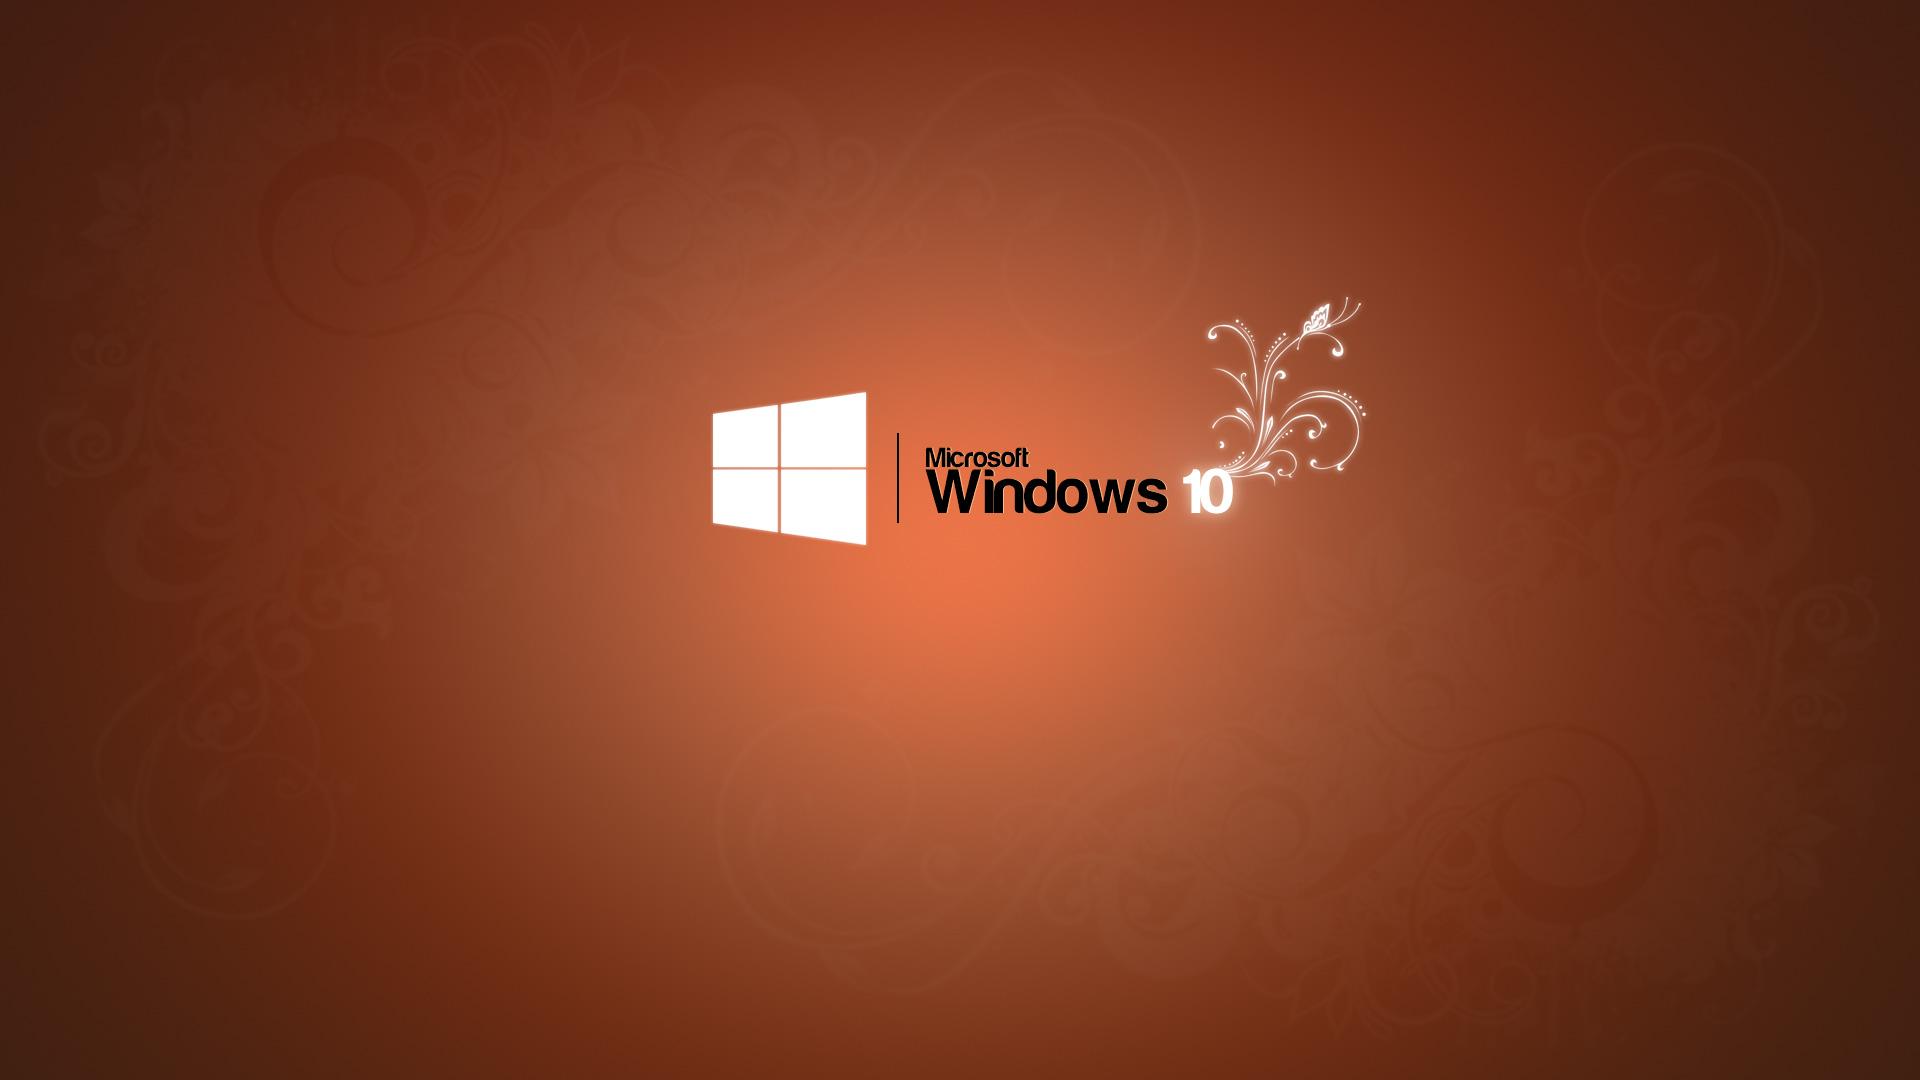 1080P Logo - Windows 10 Wallpaper 1080p Full HD Logo on Orange Background with ...